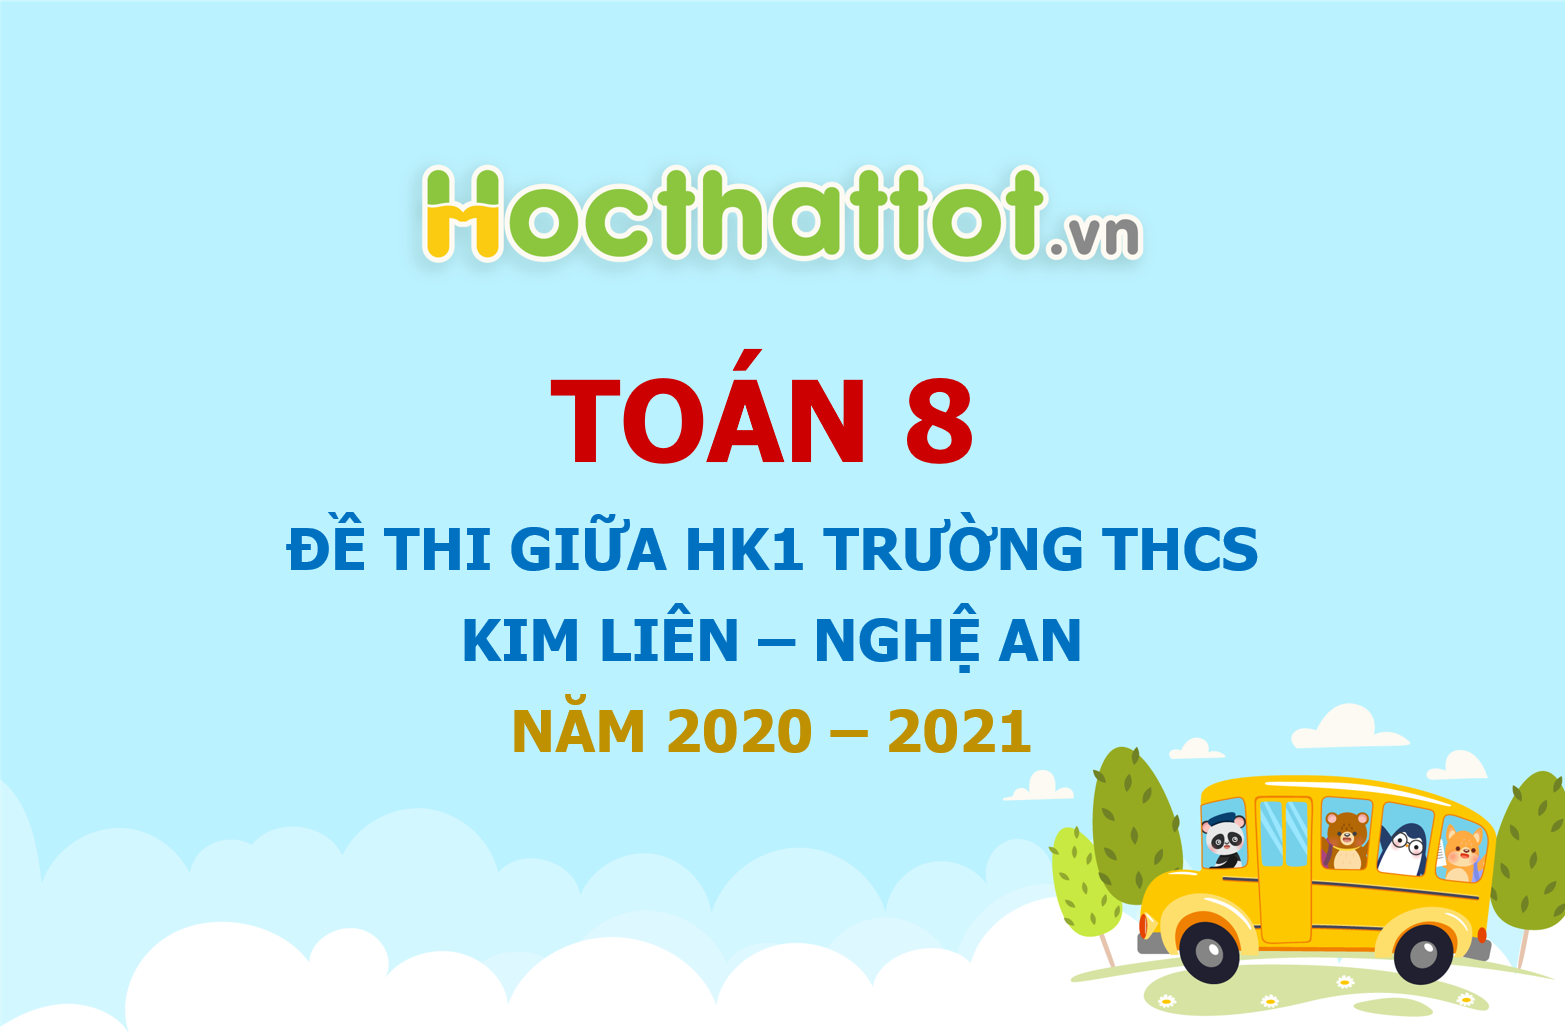 de-thi-giua-hk1-toan-8-nam-2020-2021-truong-thcs-kim-lien-nghe-an